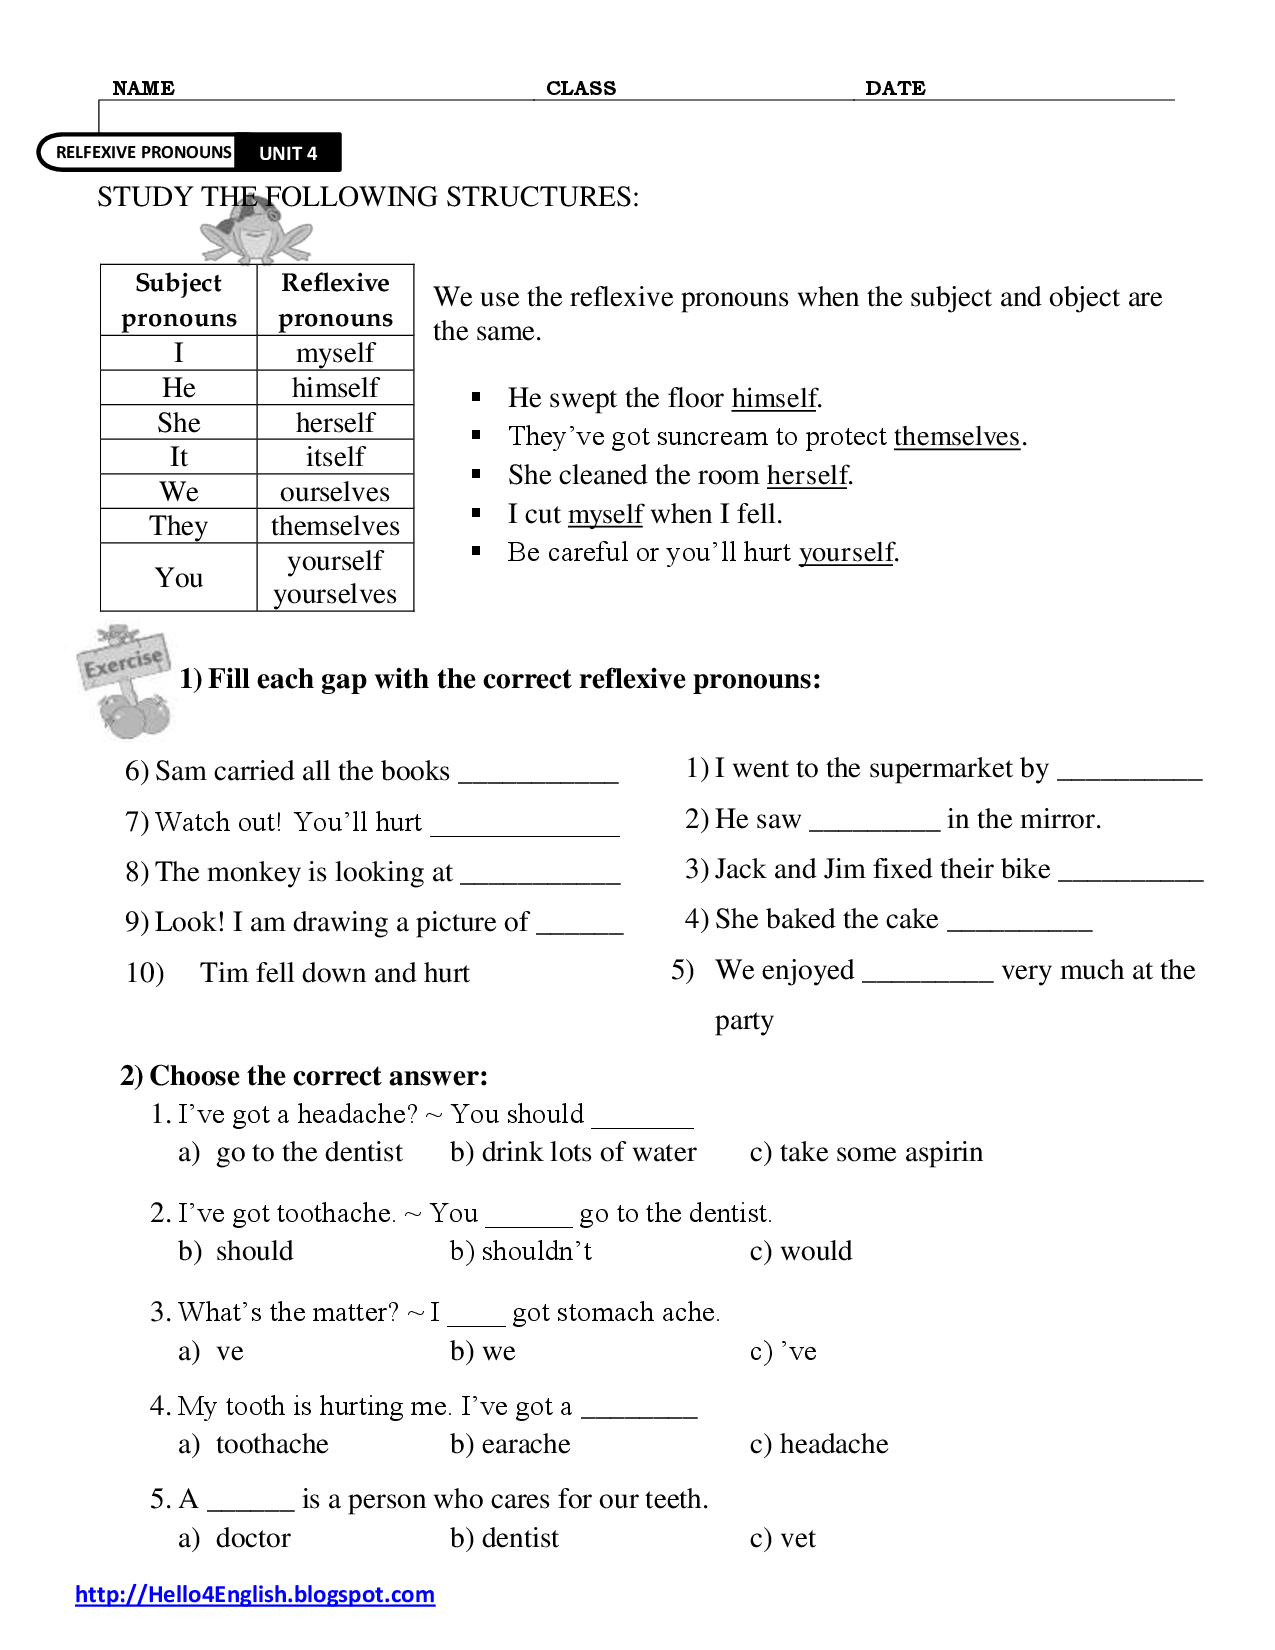 parts-speech-worksheets-pronoun-worksheets